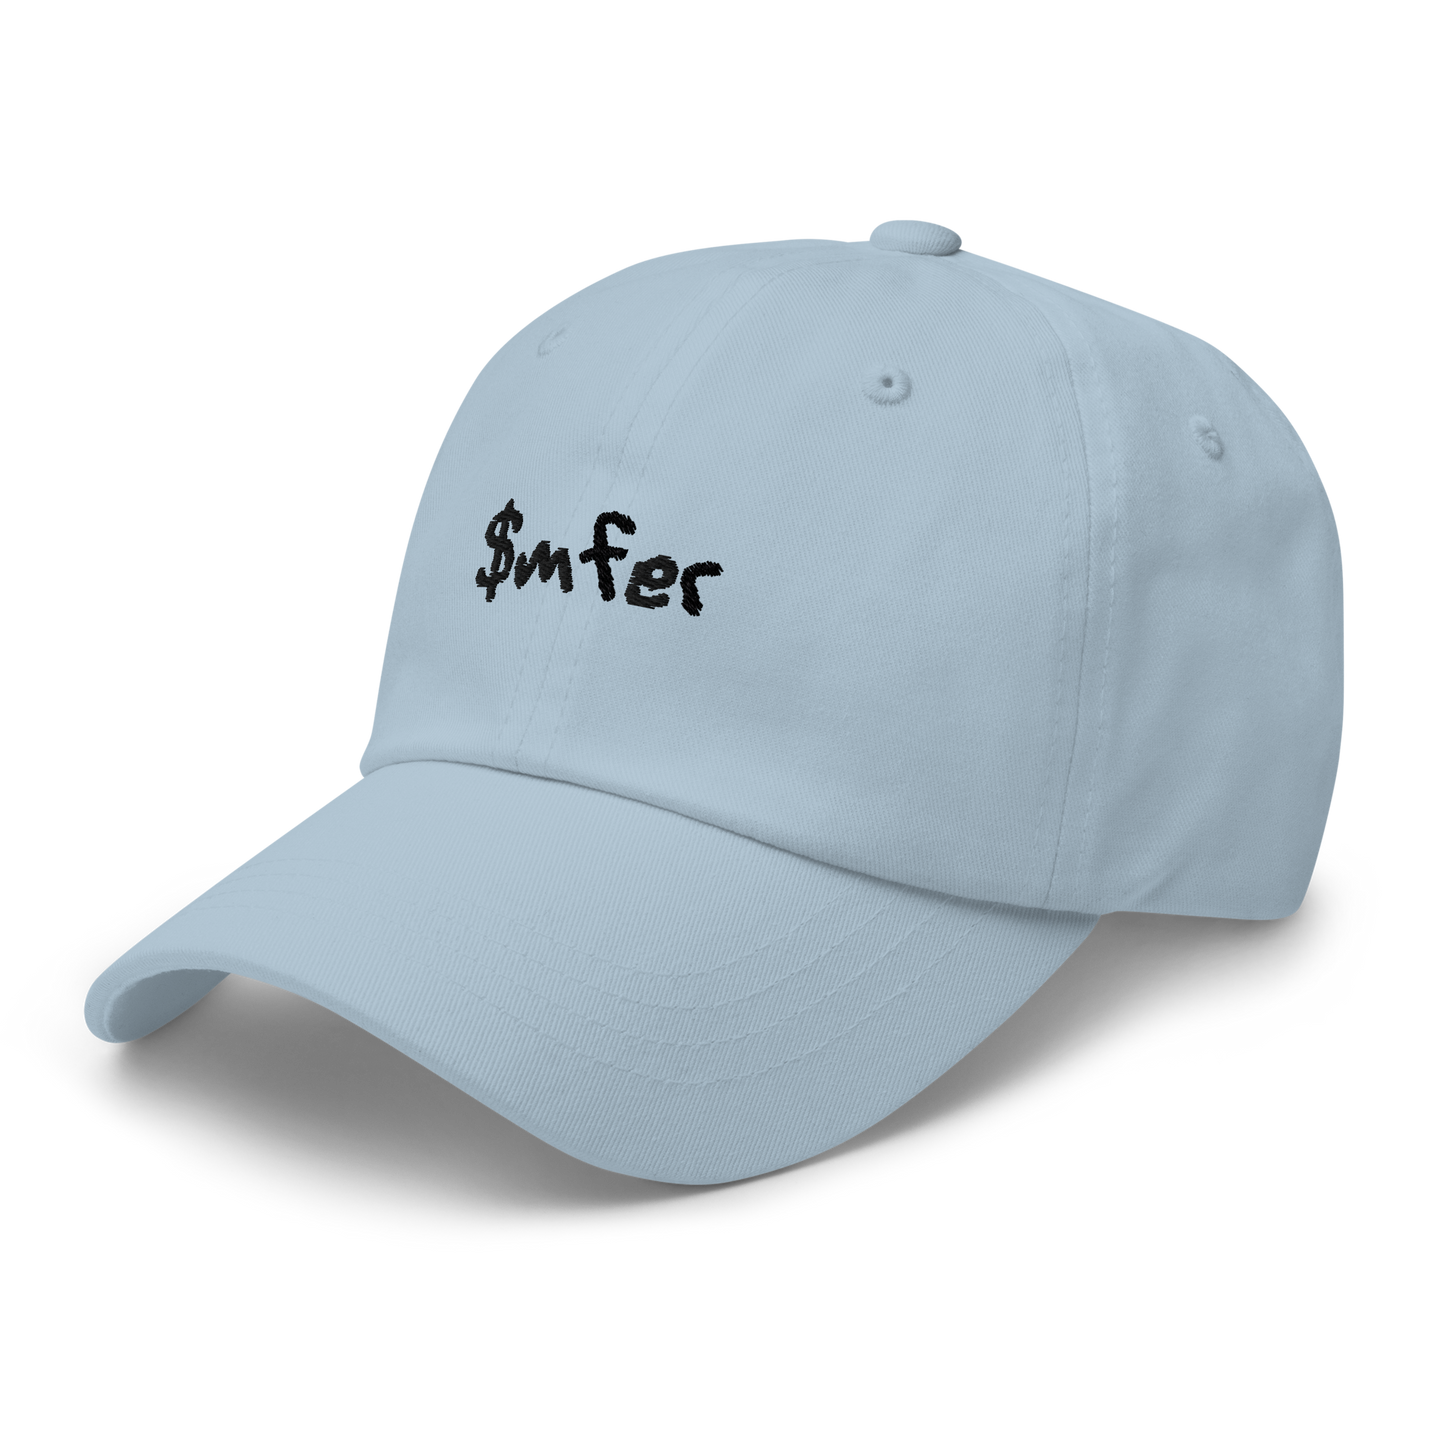 $mfer hat black text